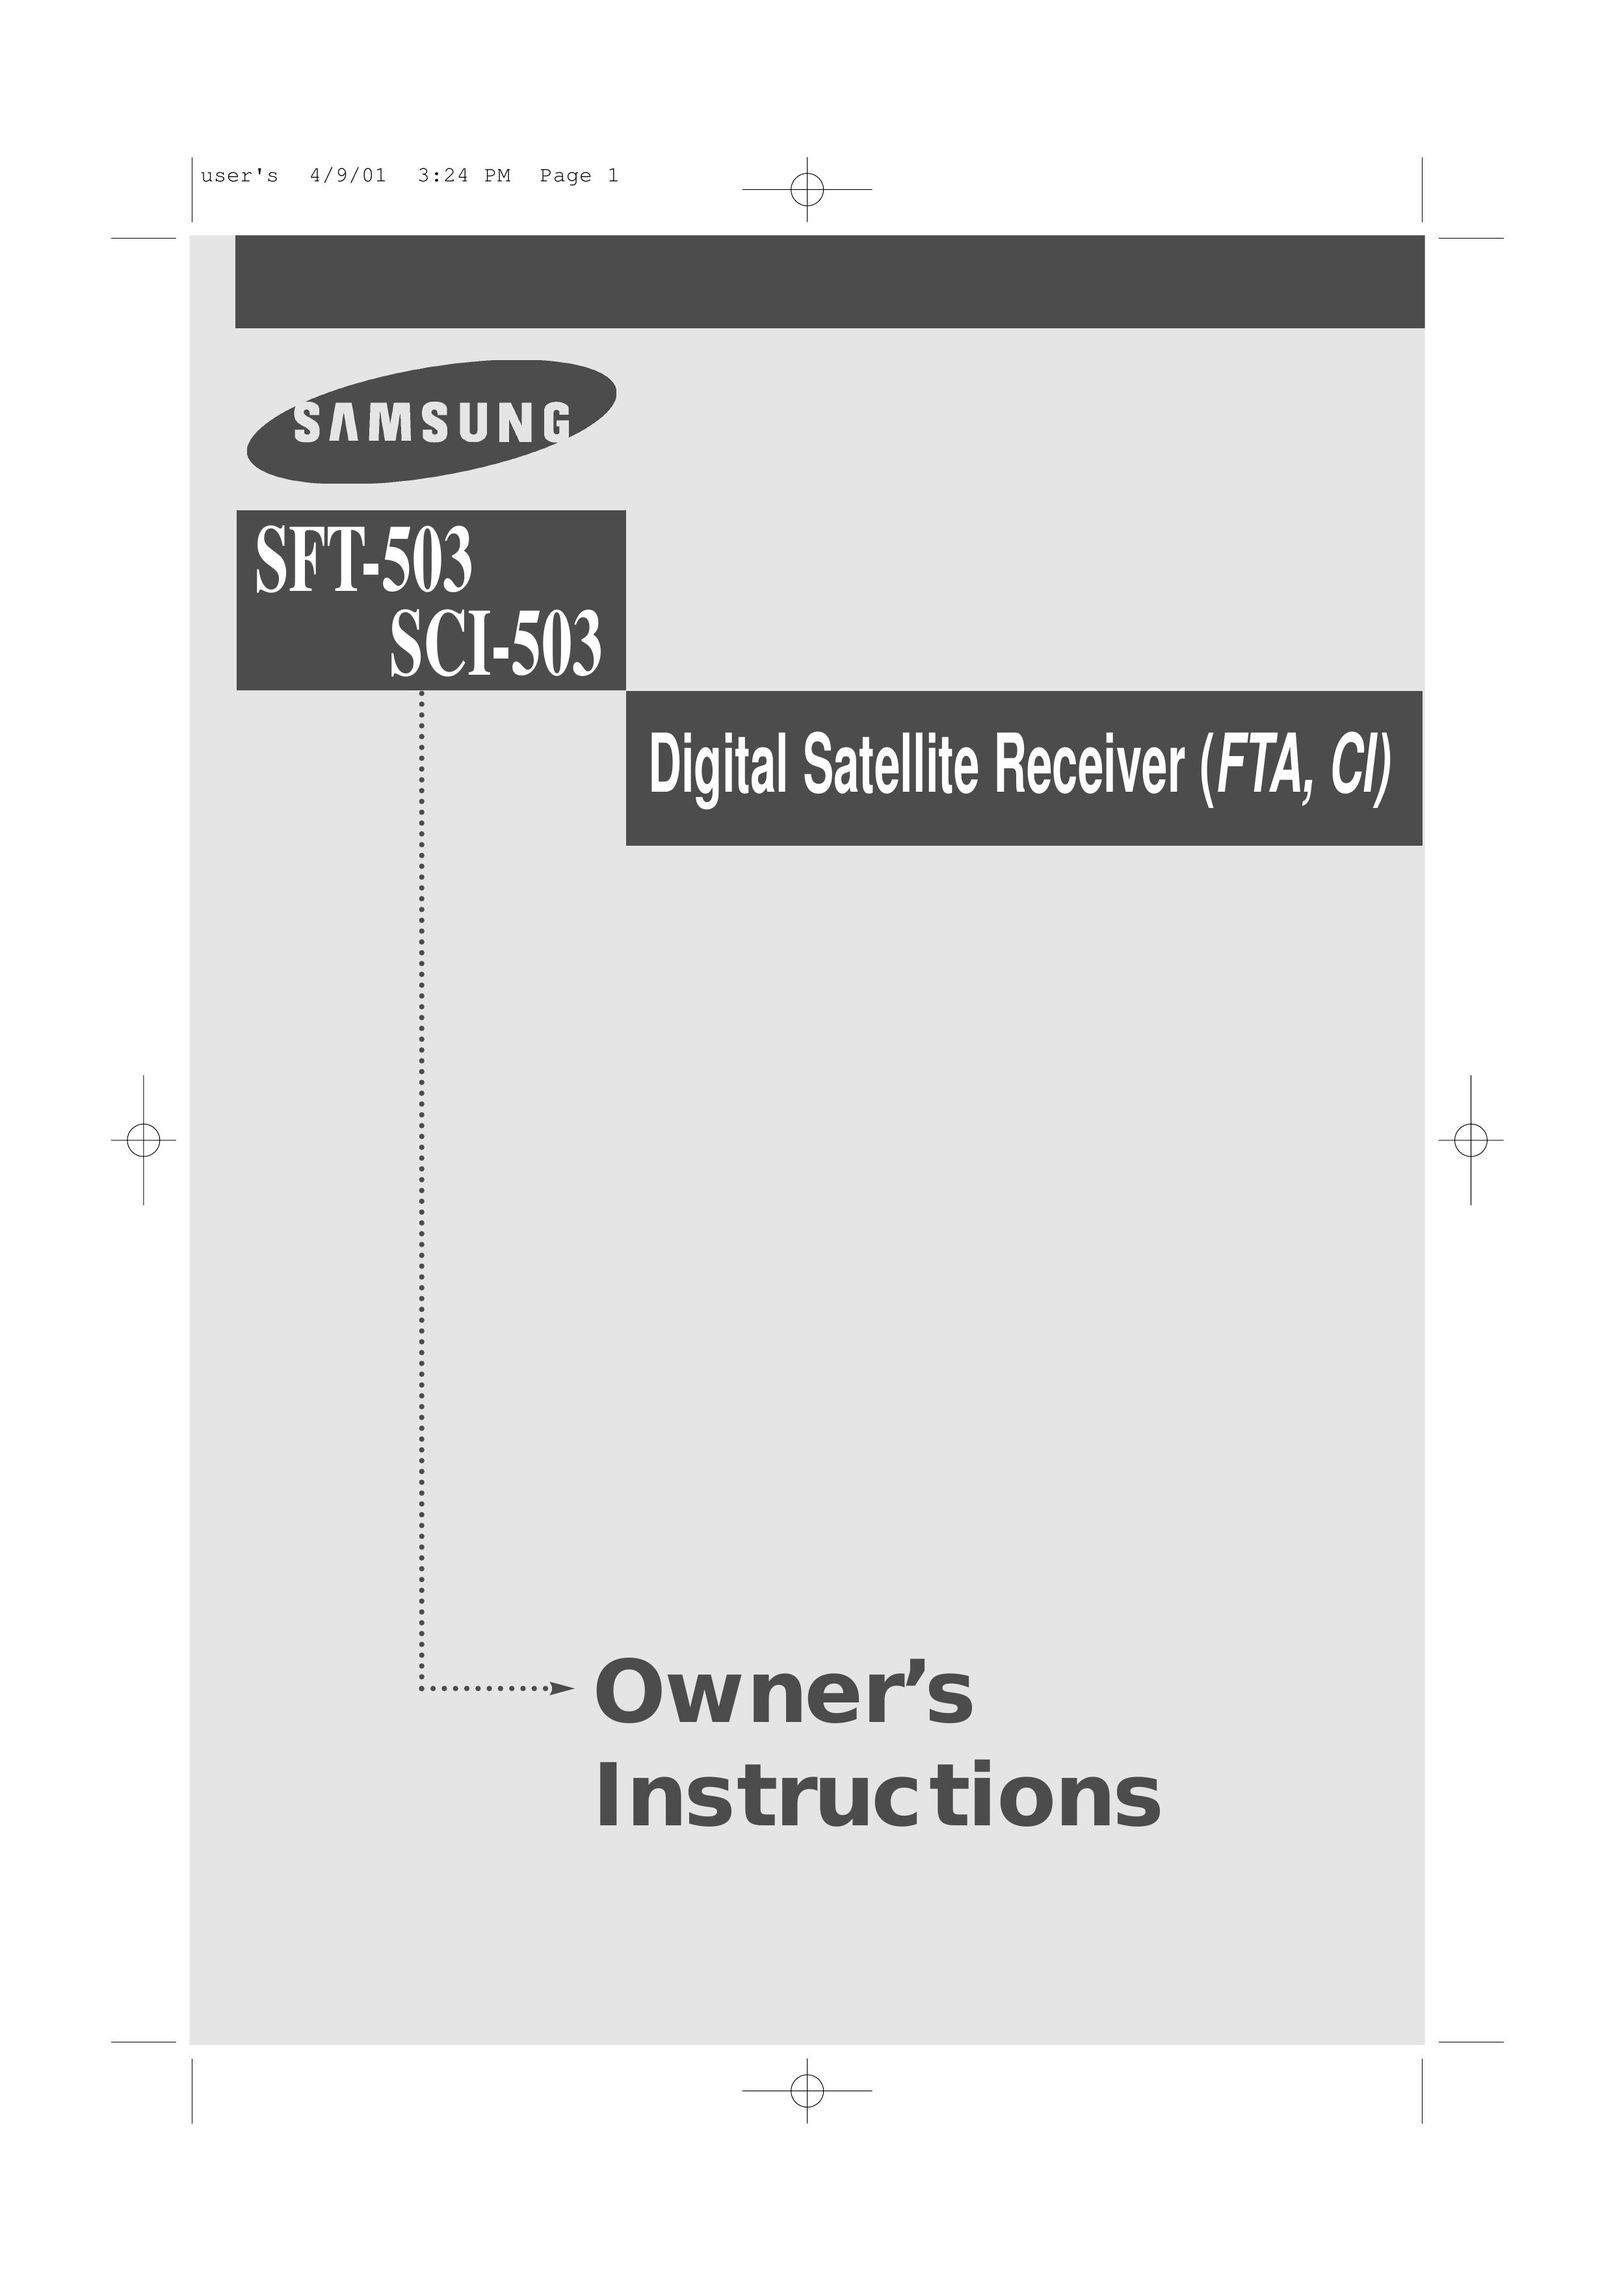 Samsung SCI-503 Satellite TV System User Manual